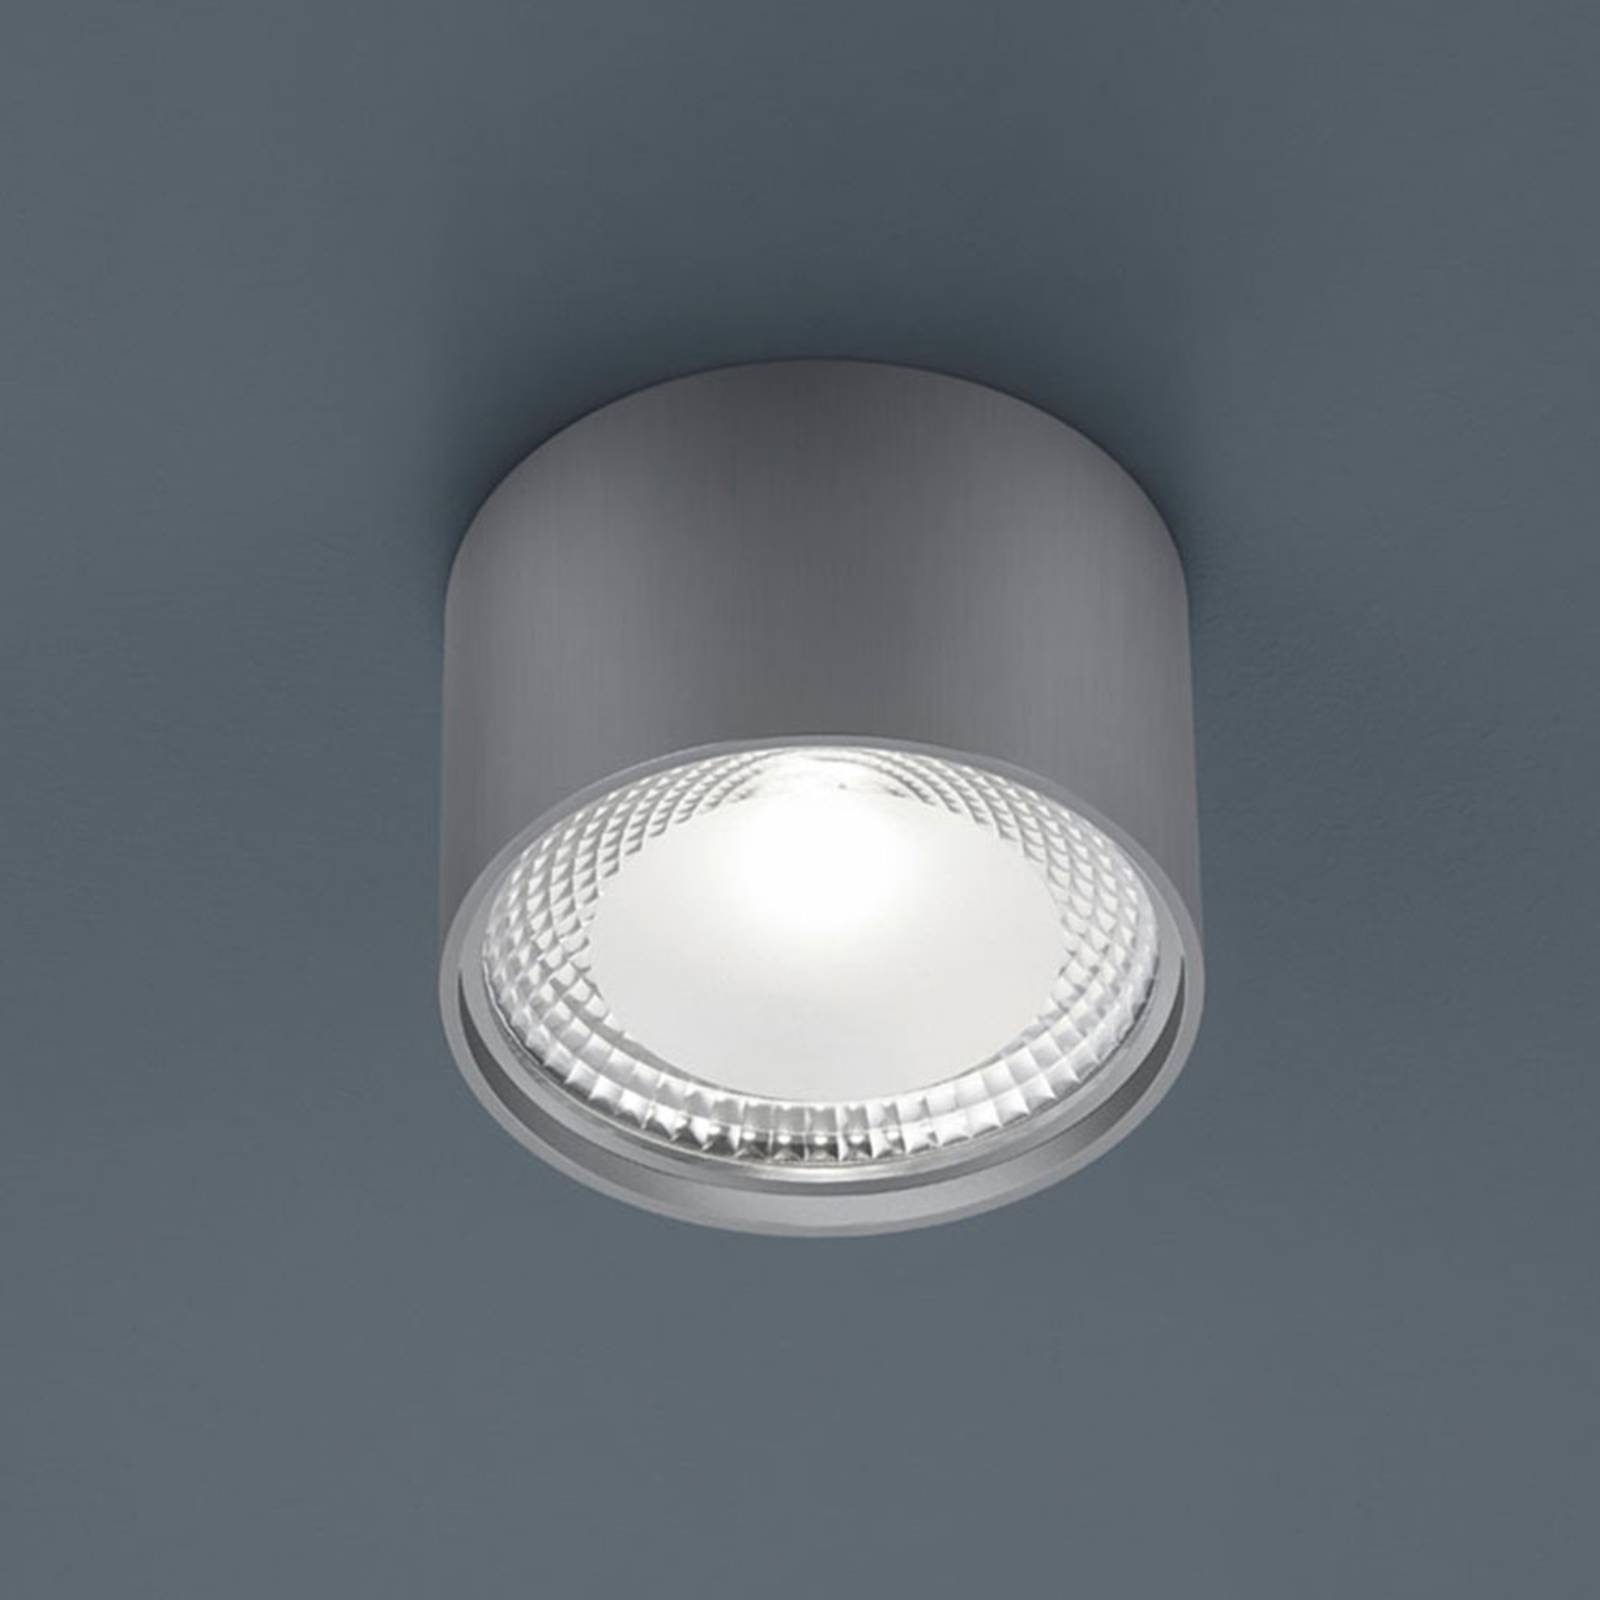 Helestra Kari LED plafondlamp, rond, nikkel